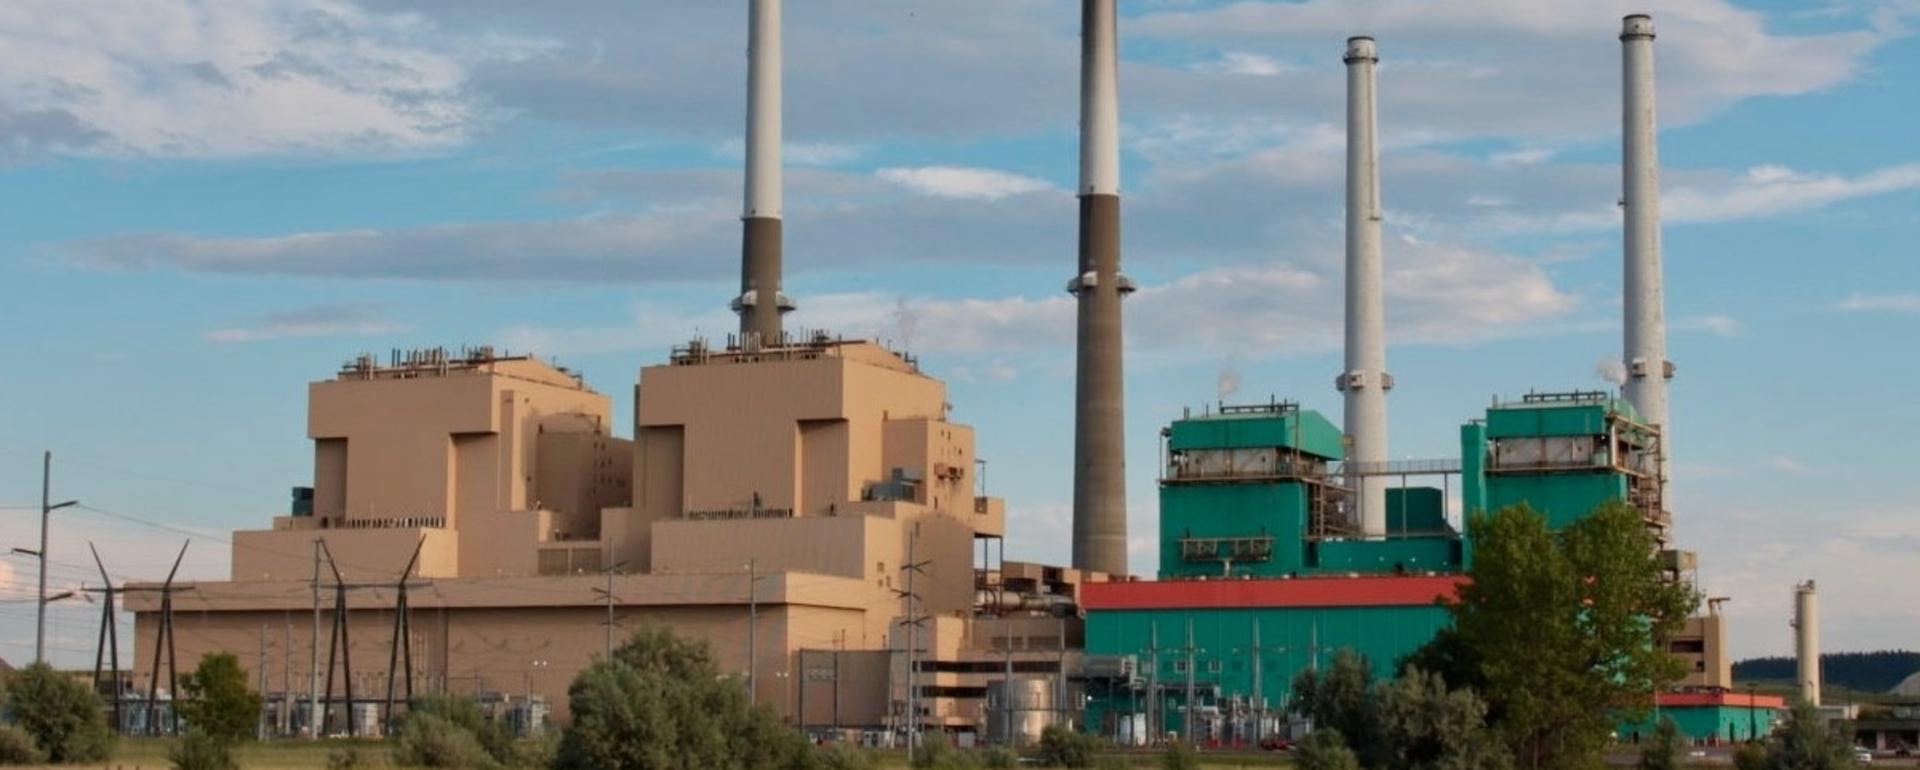 Montana's Colstrip Power Plant